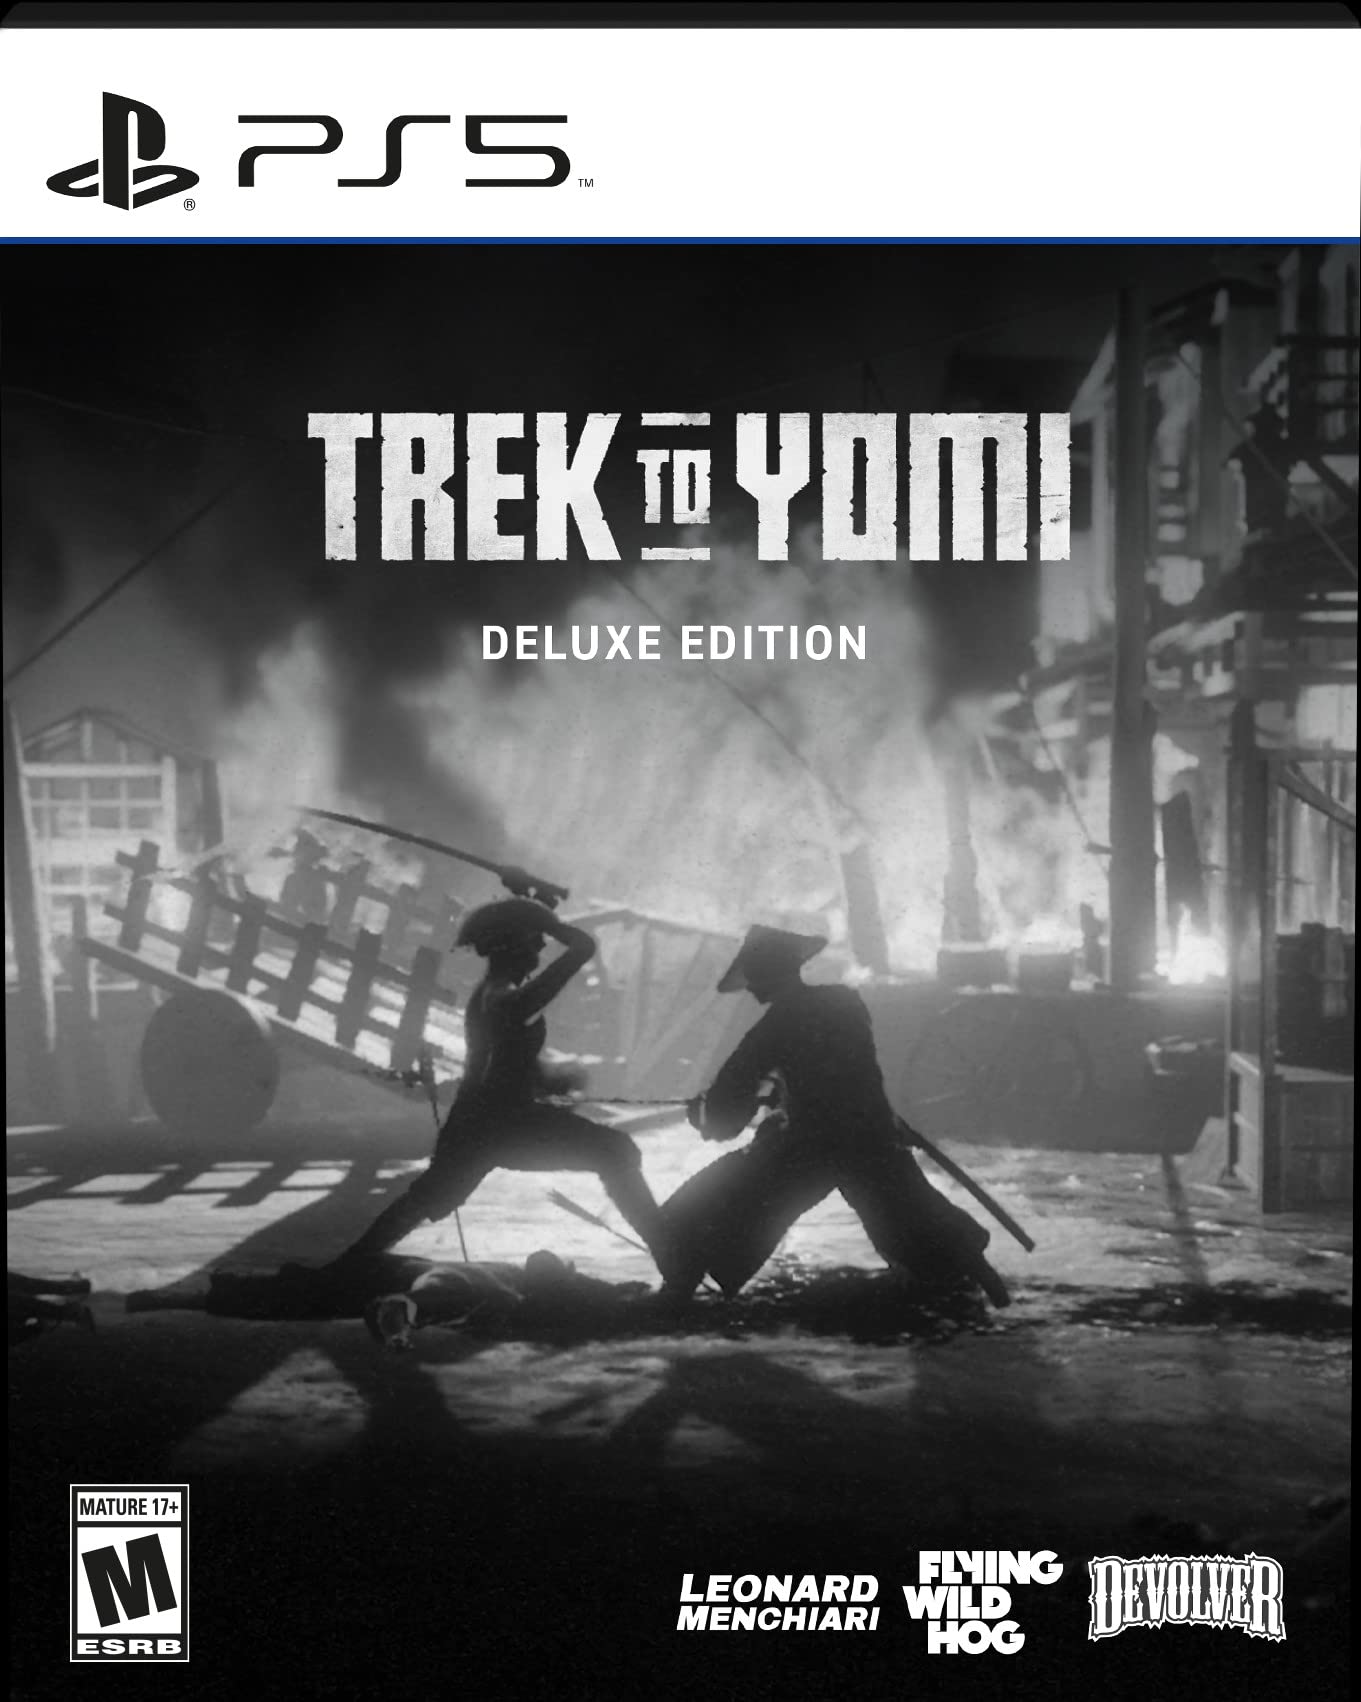 $34.99: Trek to Yomi Deluxe Edition (PS5)